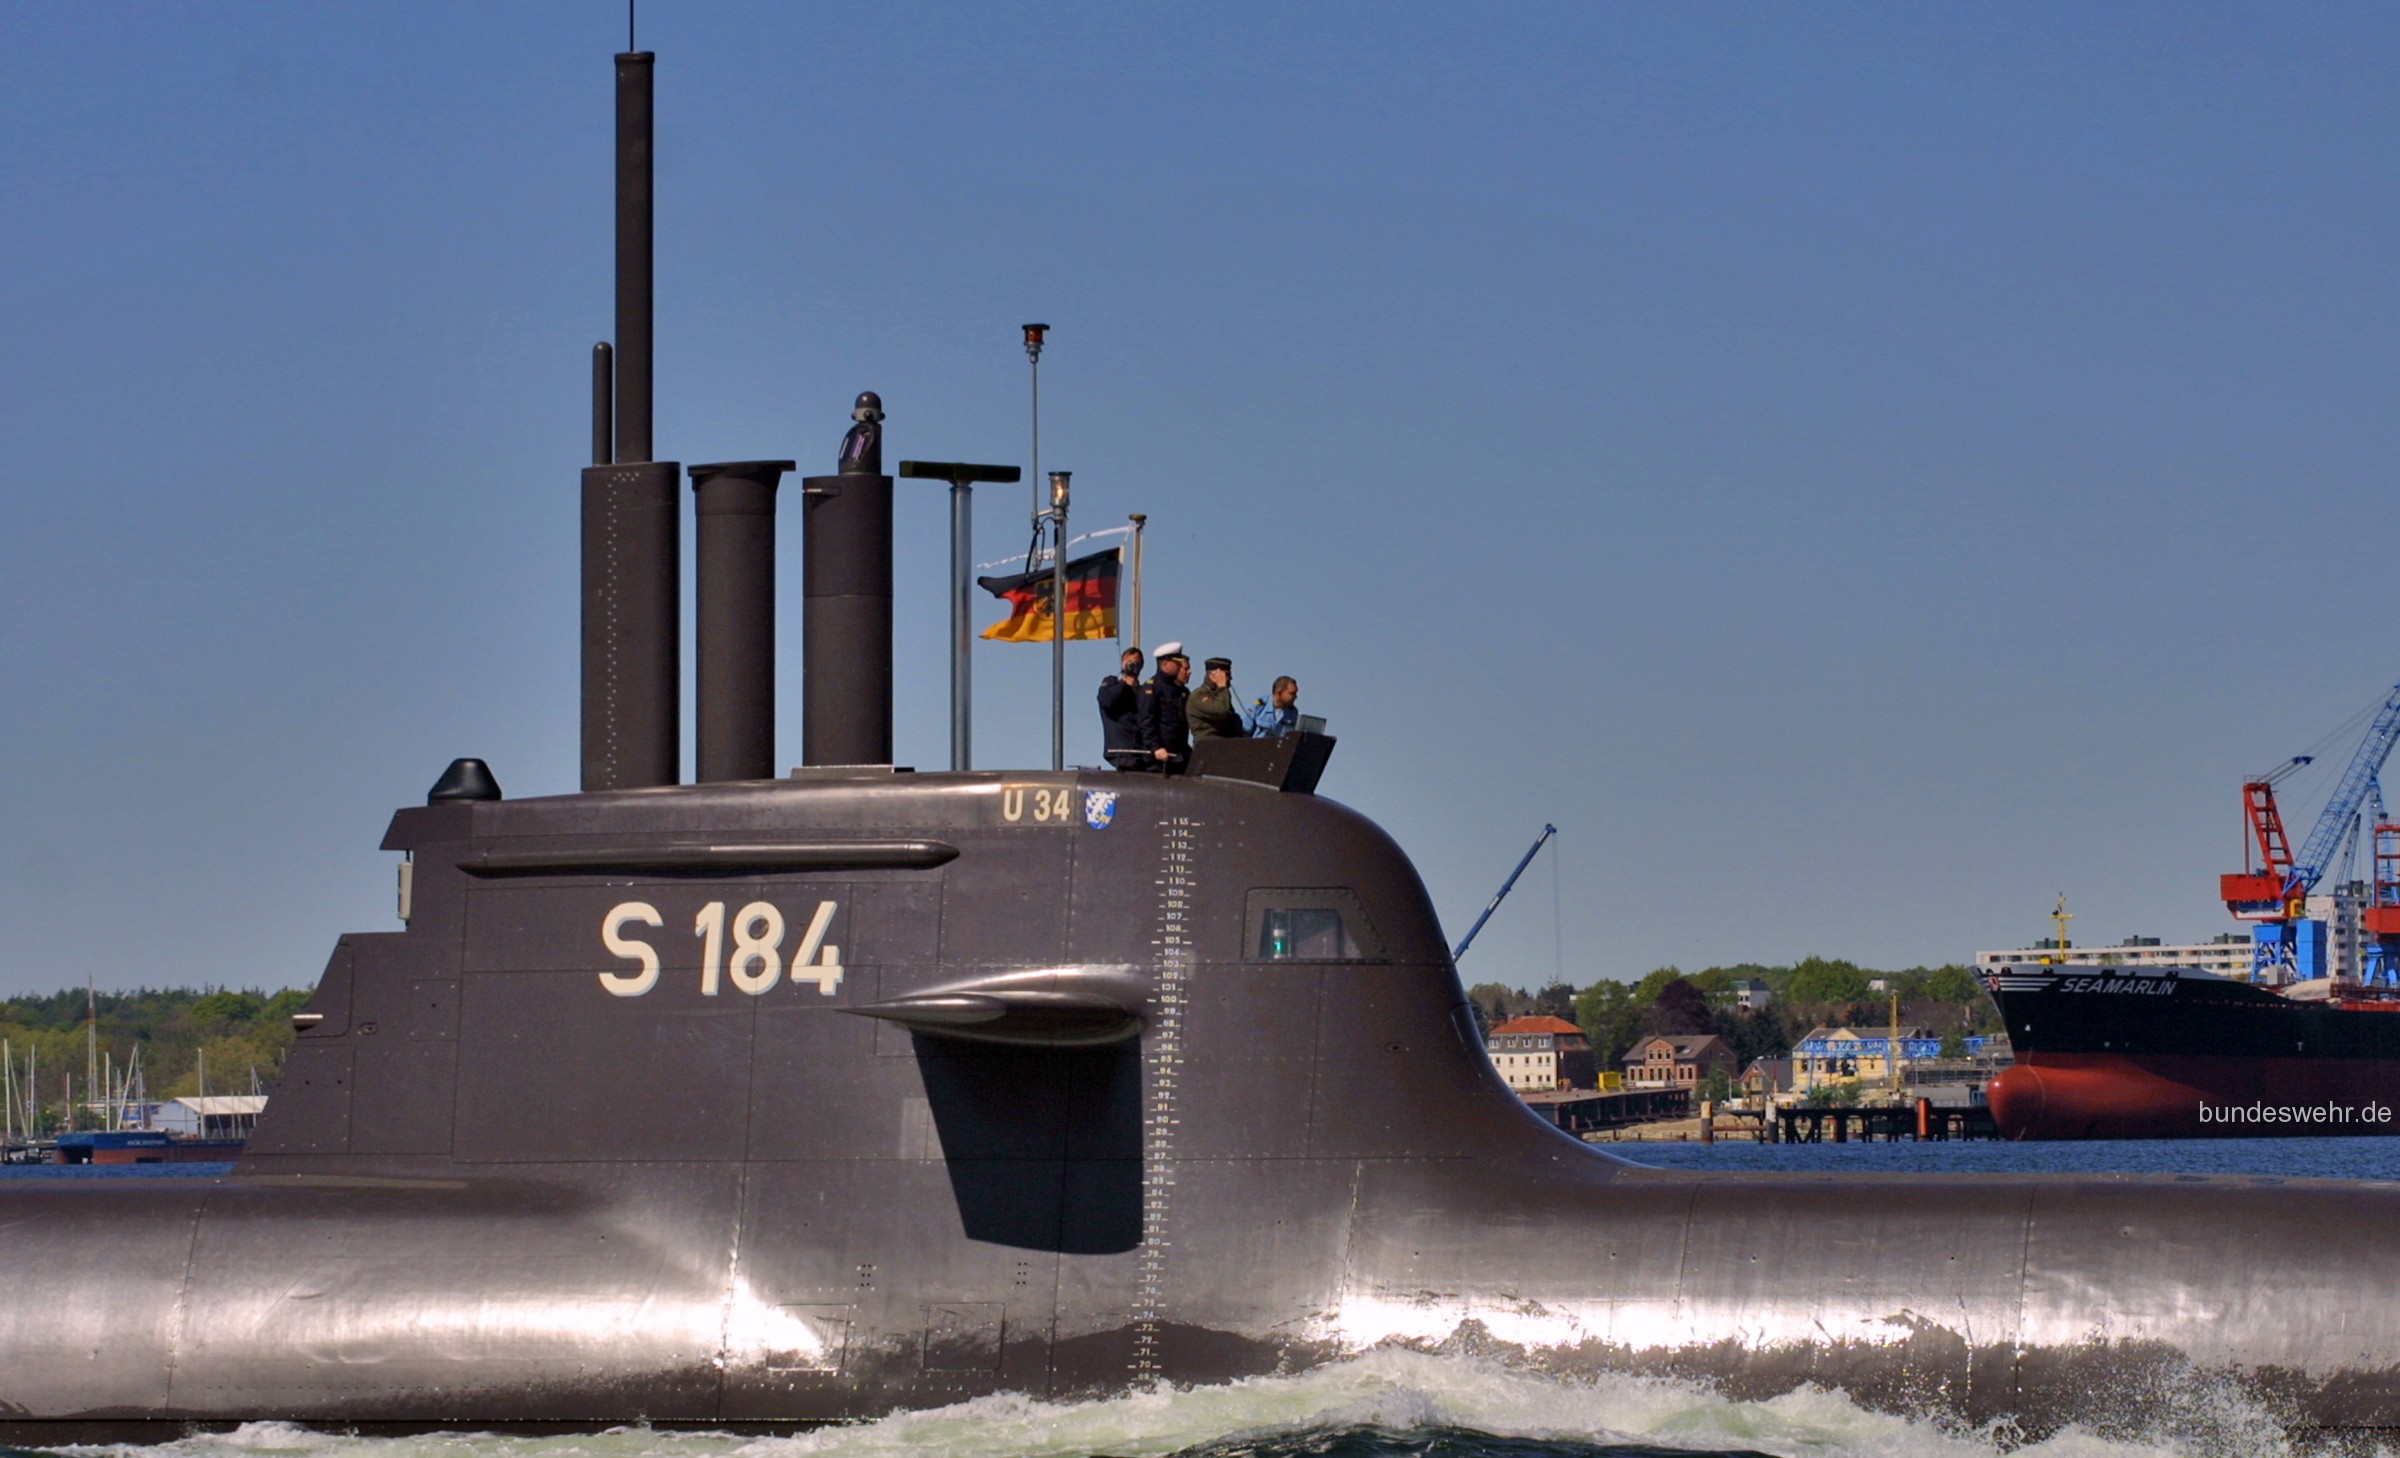 s-184 fgs u34 type 212a class submarine german navy 23